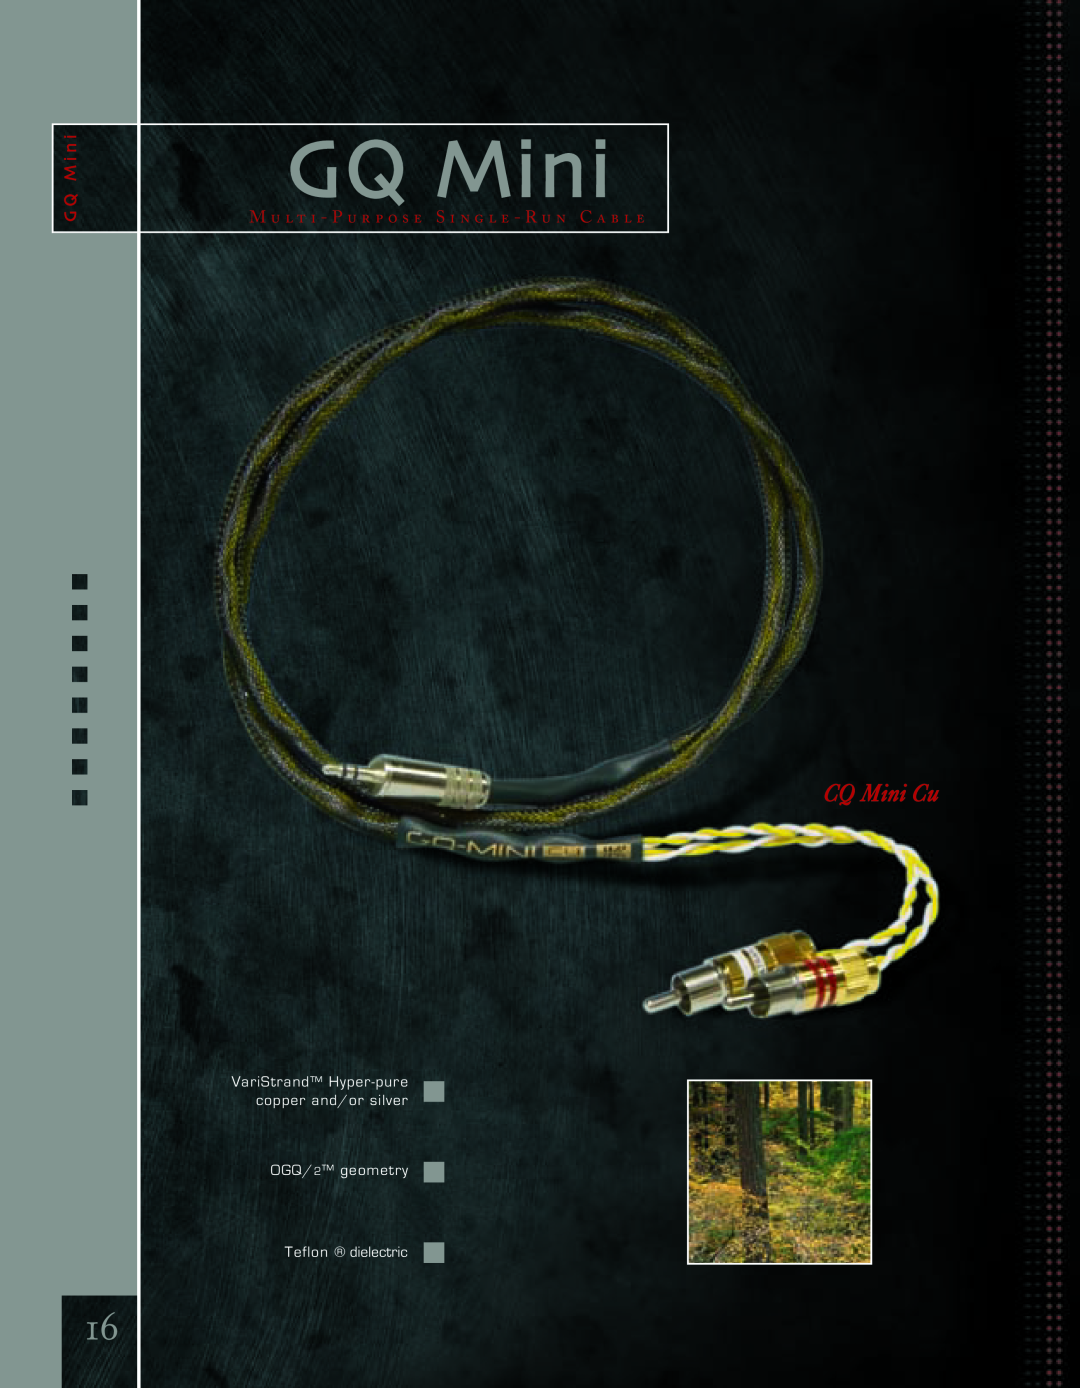 Kimber Kable PowerKordsTM manual GQ Mini, CQ Mini Cu, G Q M i n, VariStrand Hyper-purecopper and/or silver 